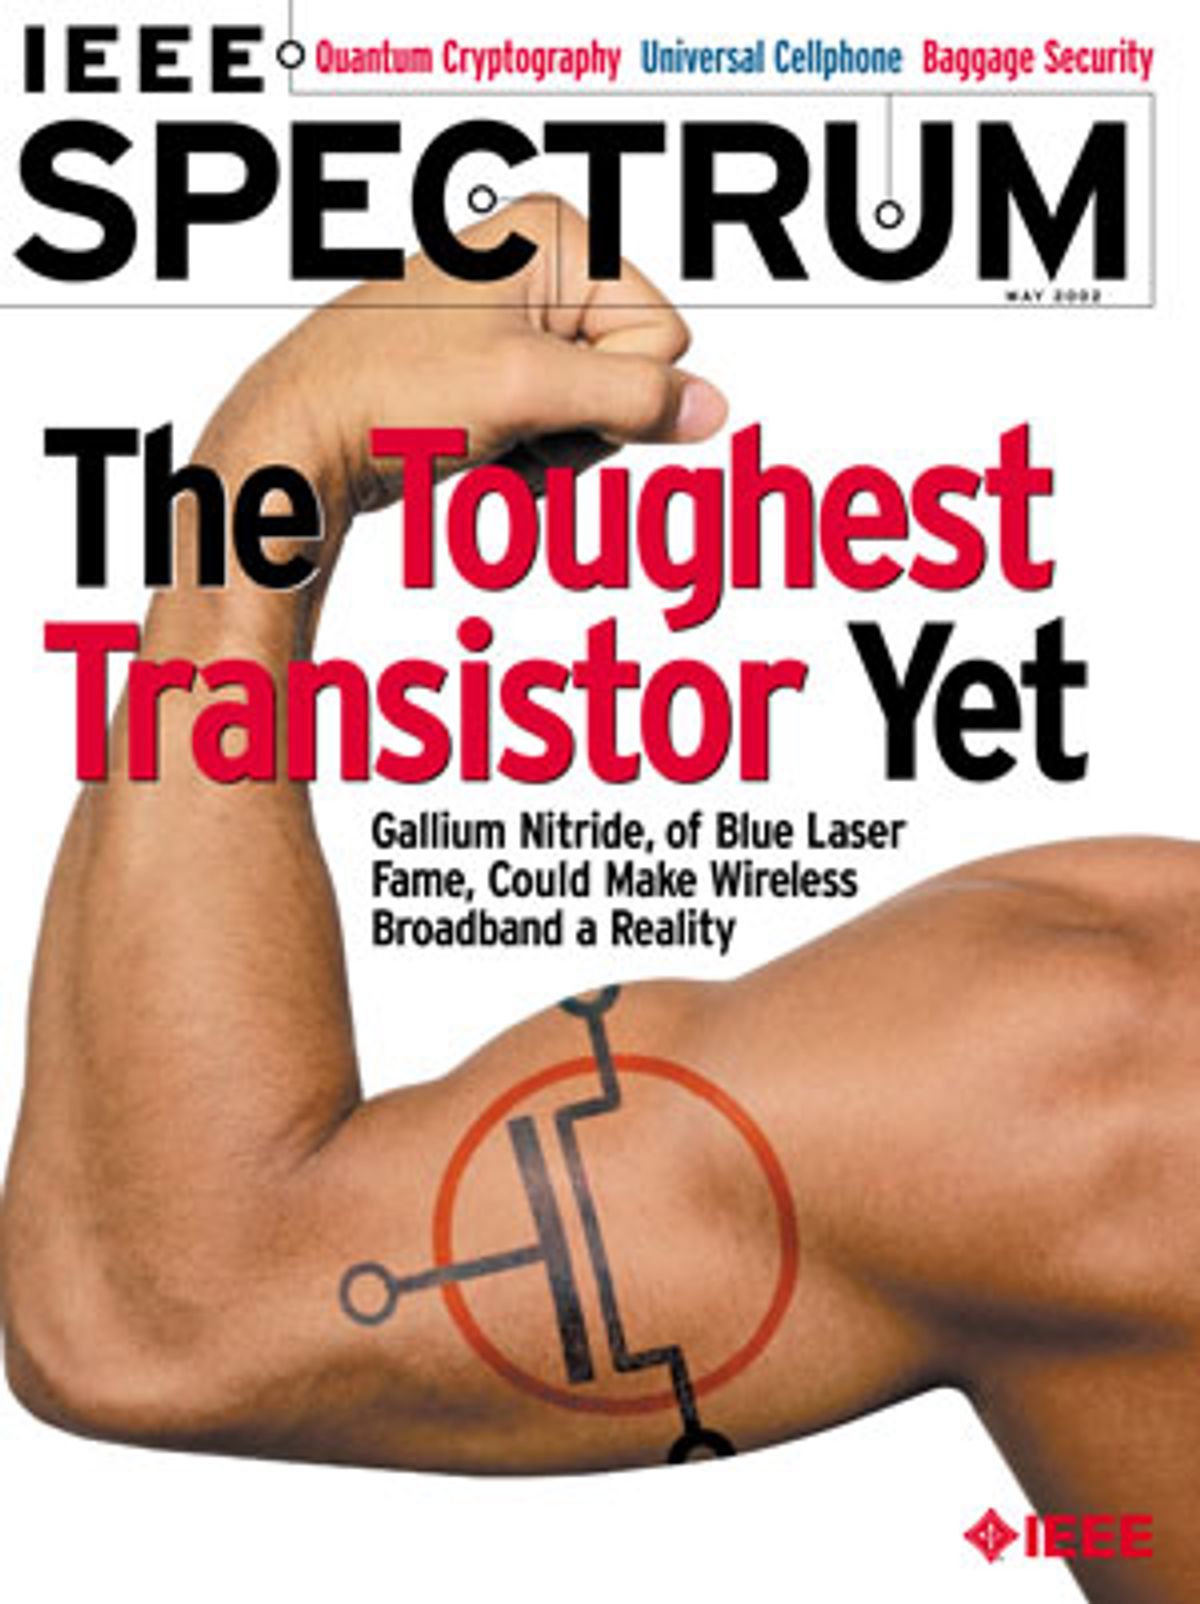 Image of IEEE Spectrum Magazine Cover.